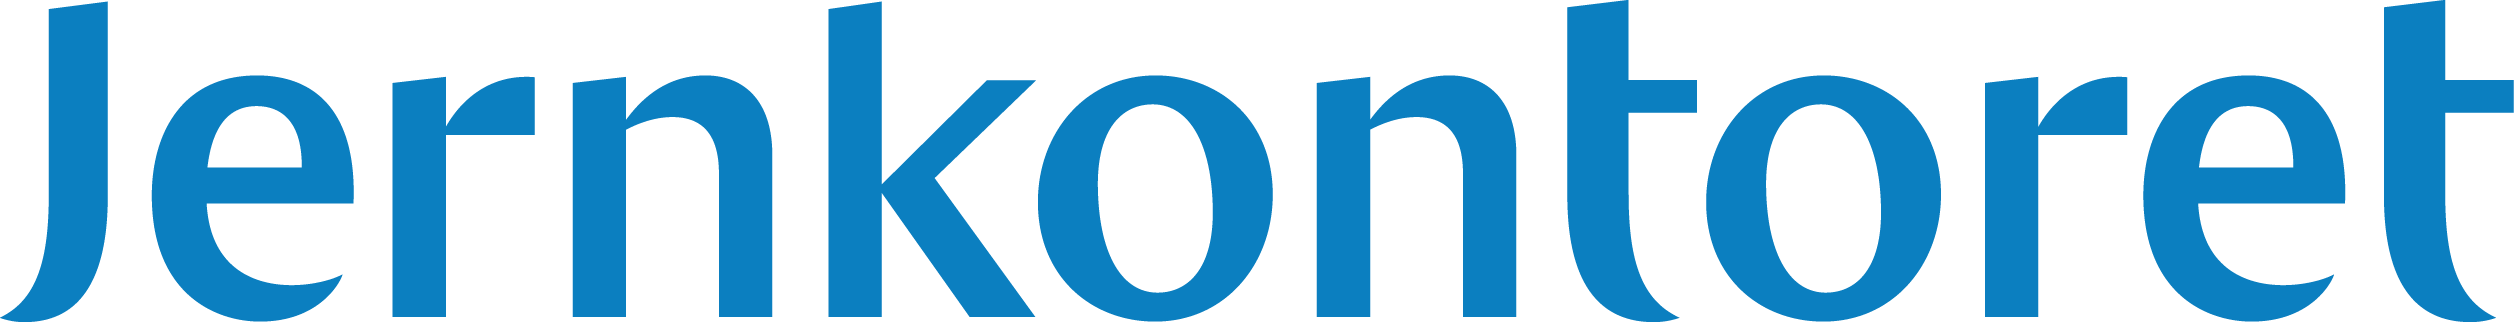 Jernkontoret logotyp